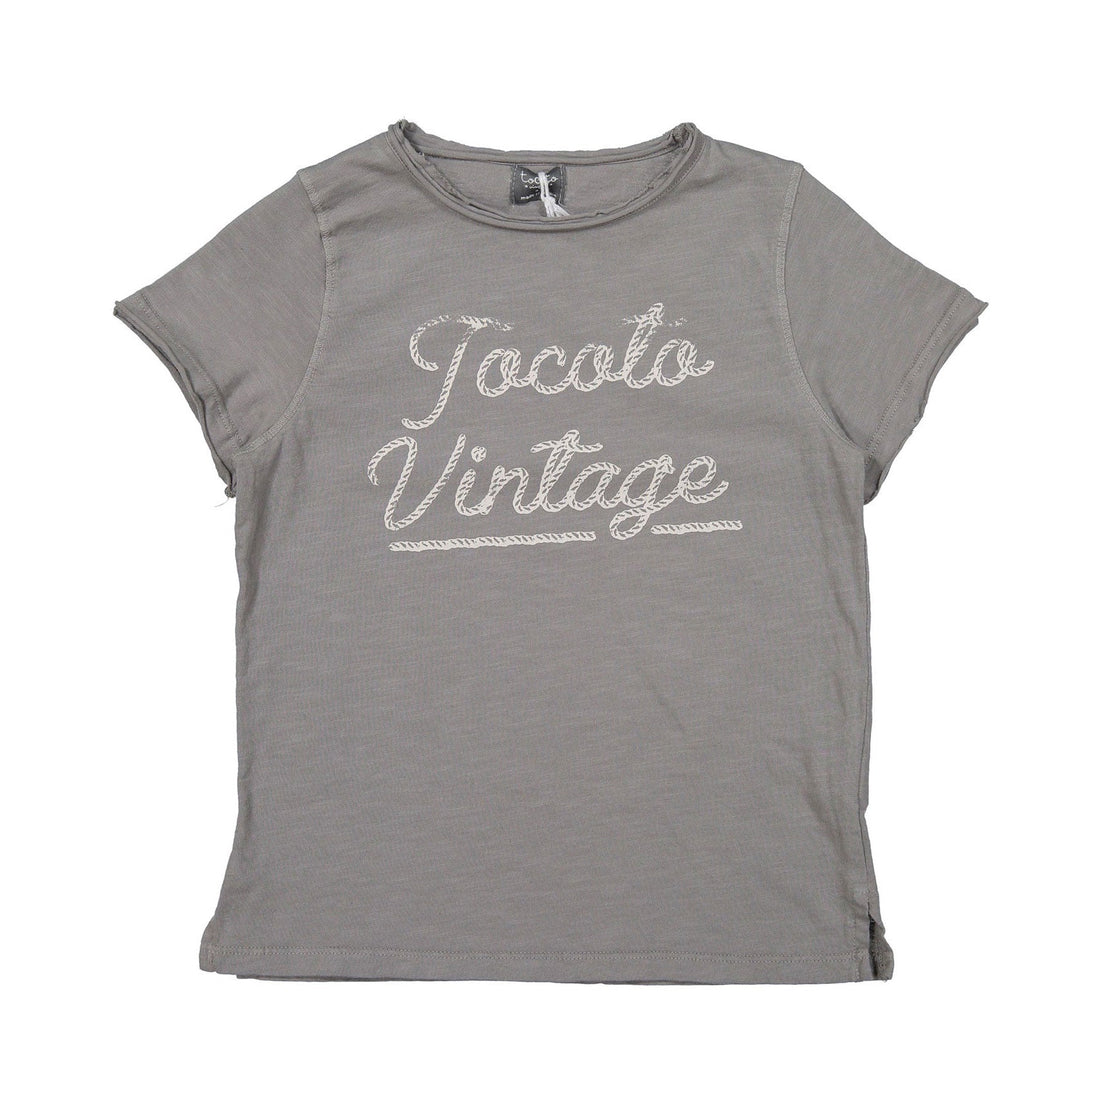 Tocoto Vintage tees 6 Tocoto Vintage Grey Logo T-shirt